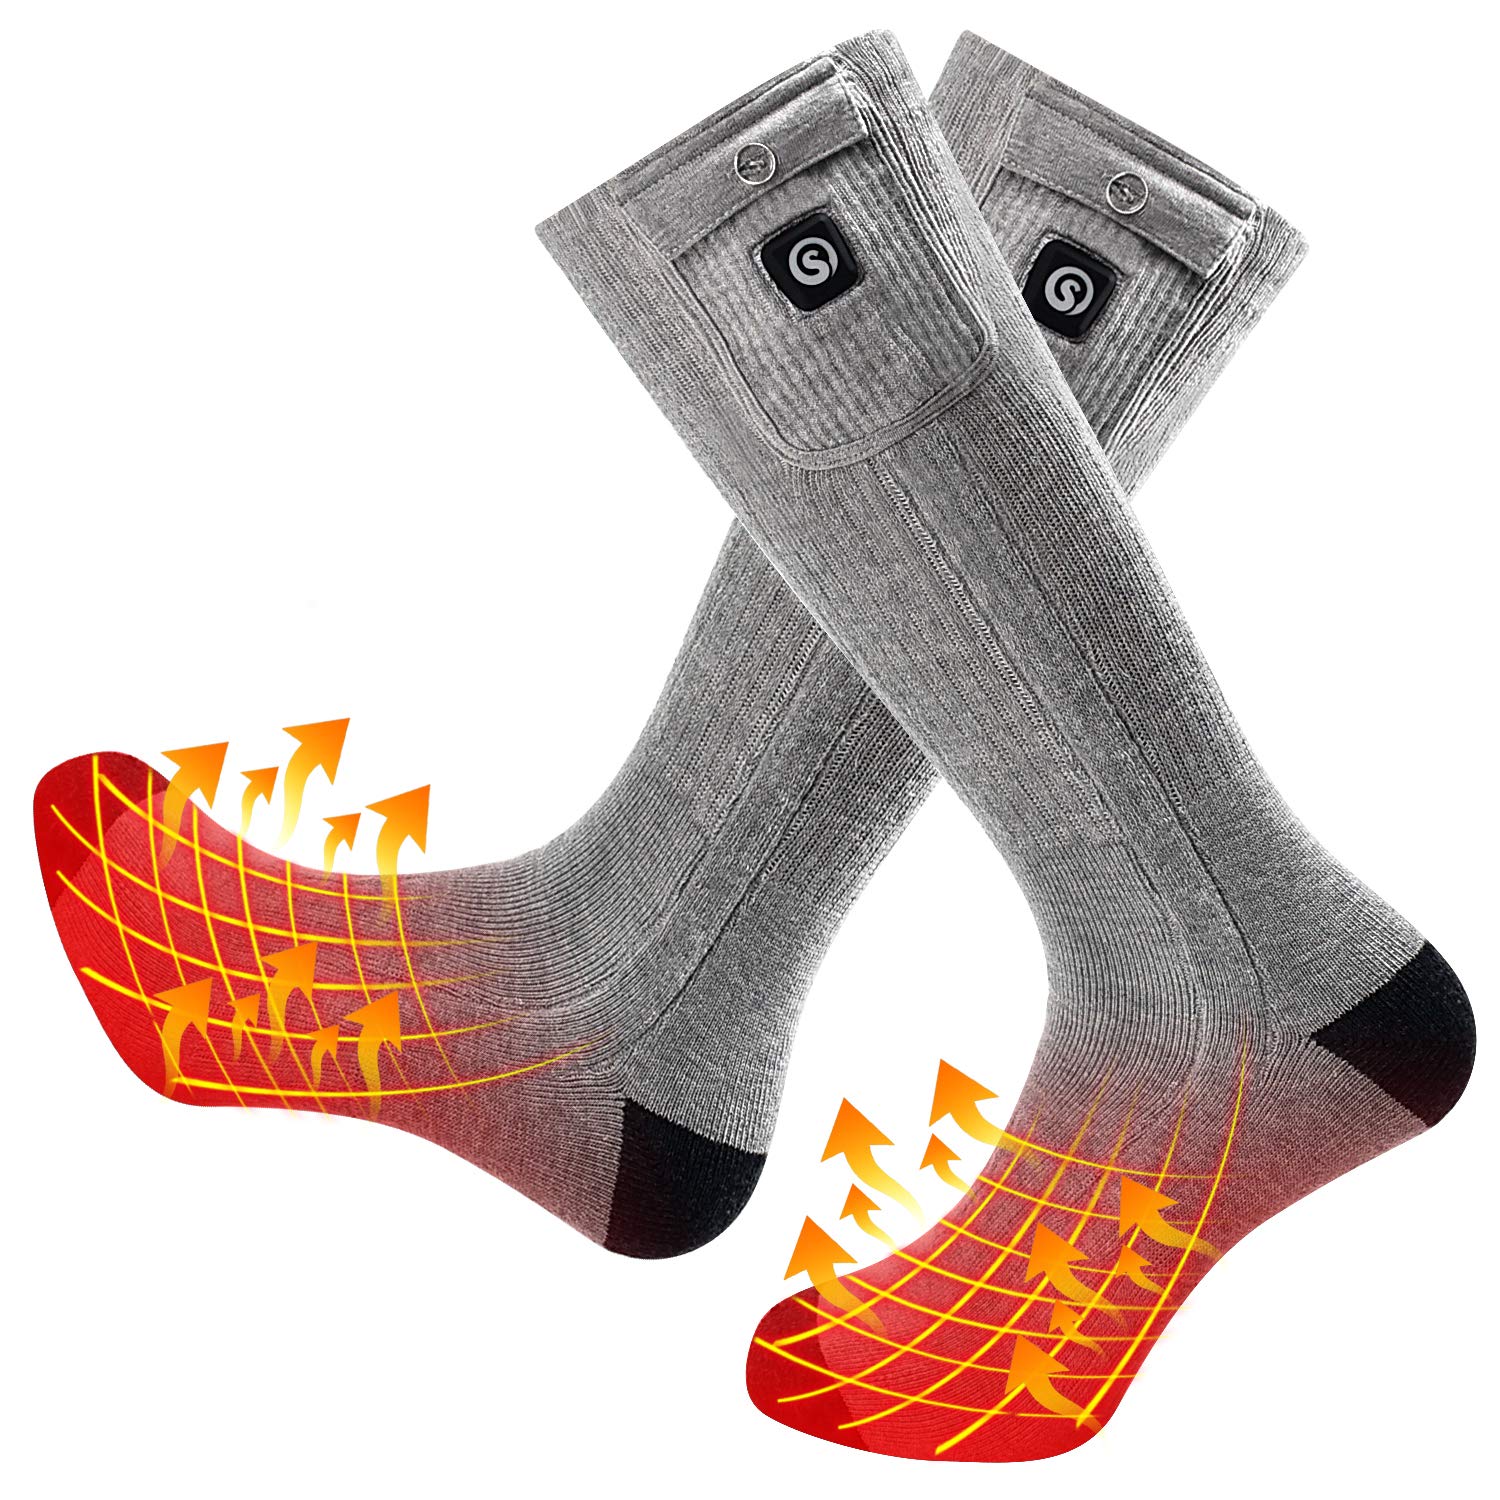 Best Heated Socks Reviewed in 2019 | TrustedHints